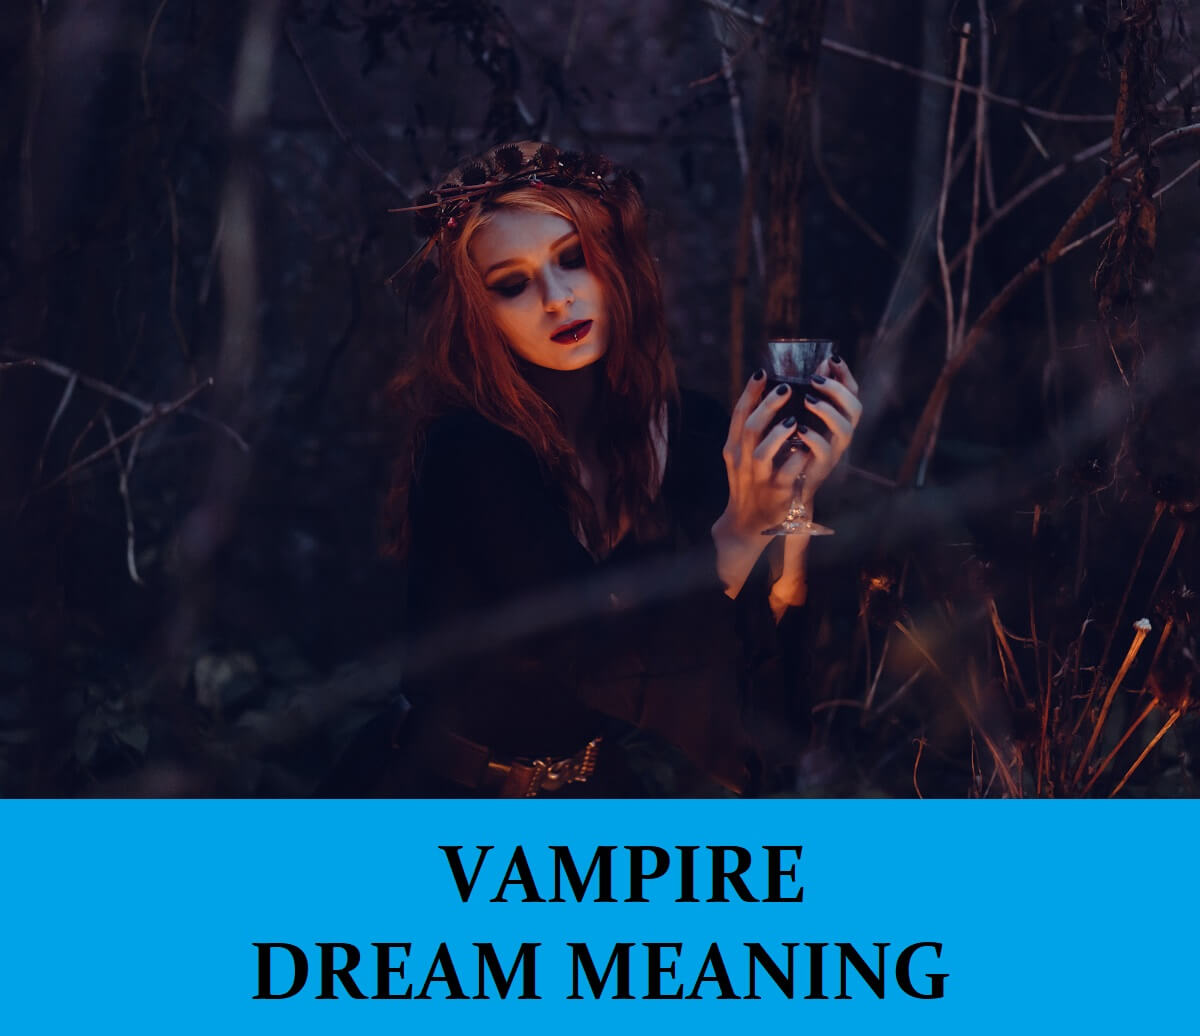  visează despre vampiri